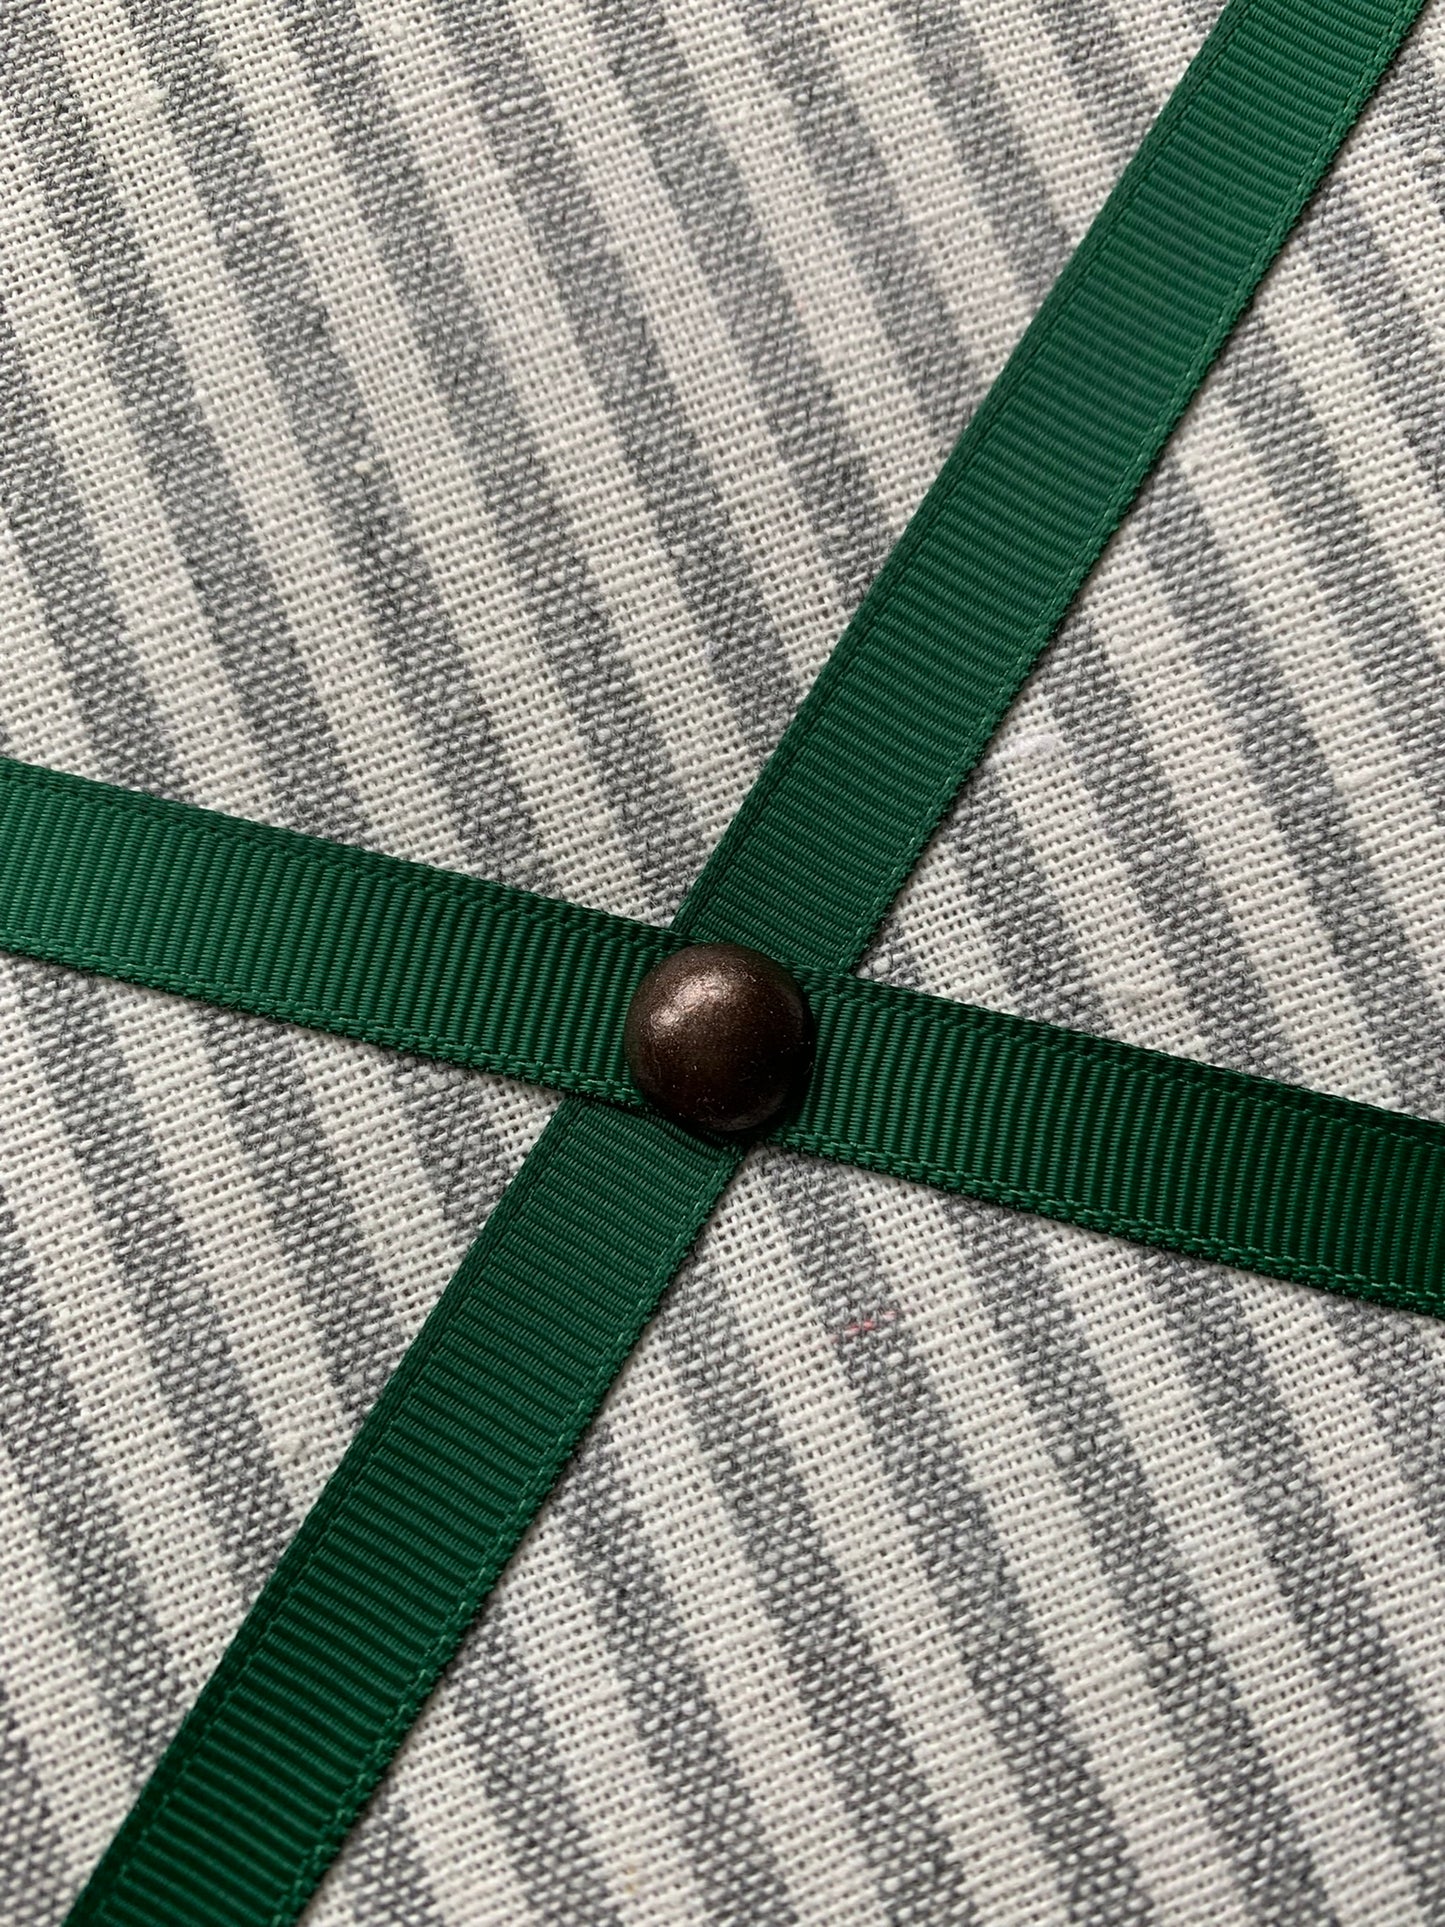 Grey Ticking Stripe Fabric Notice Board